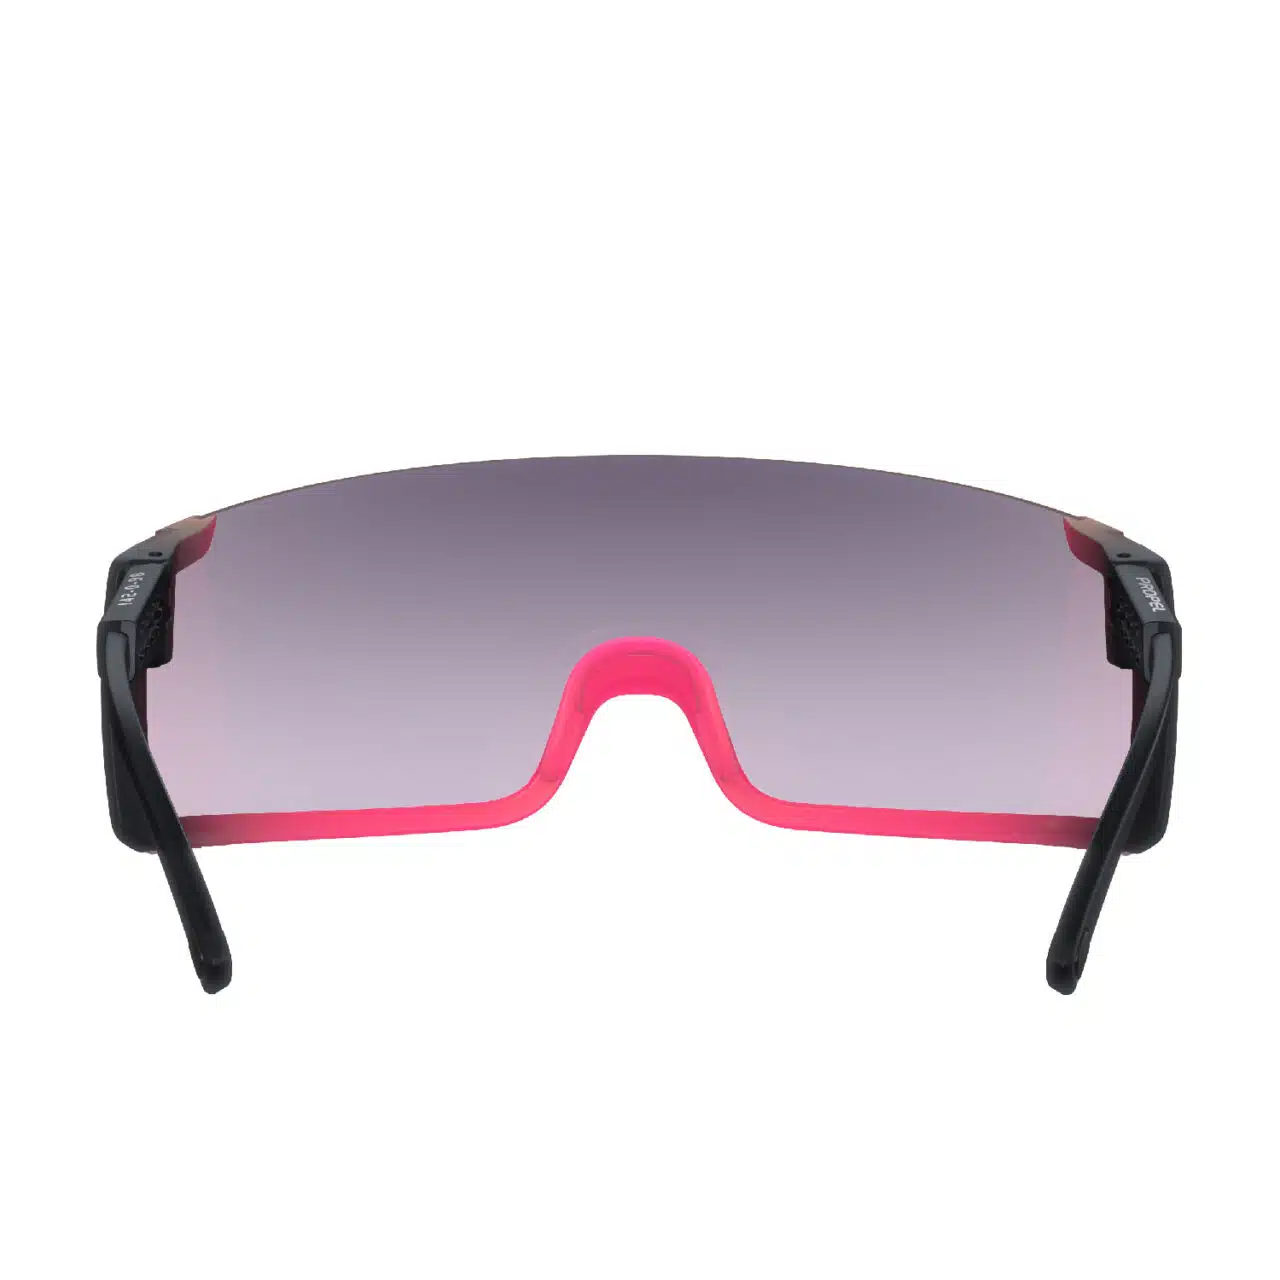 POC Propel Sunglasses Pink and Black view port